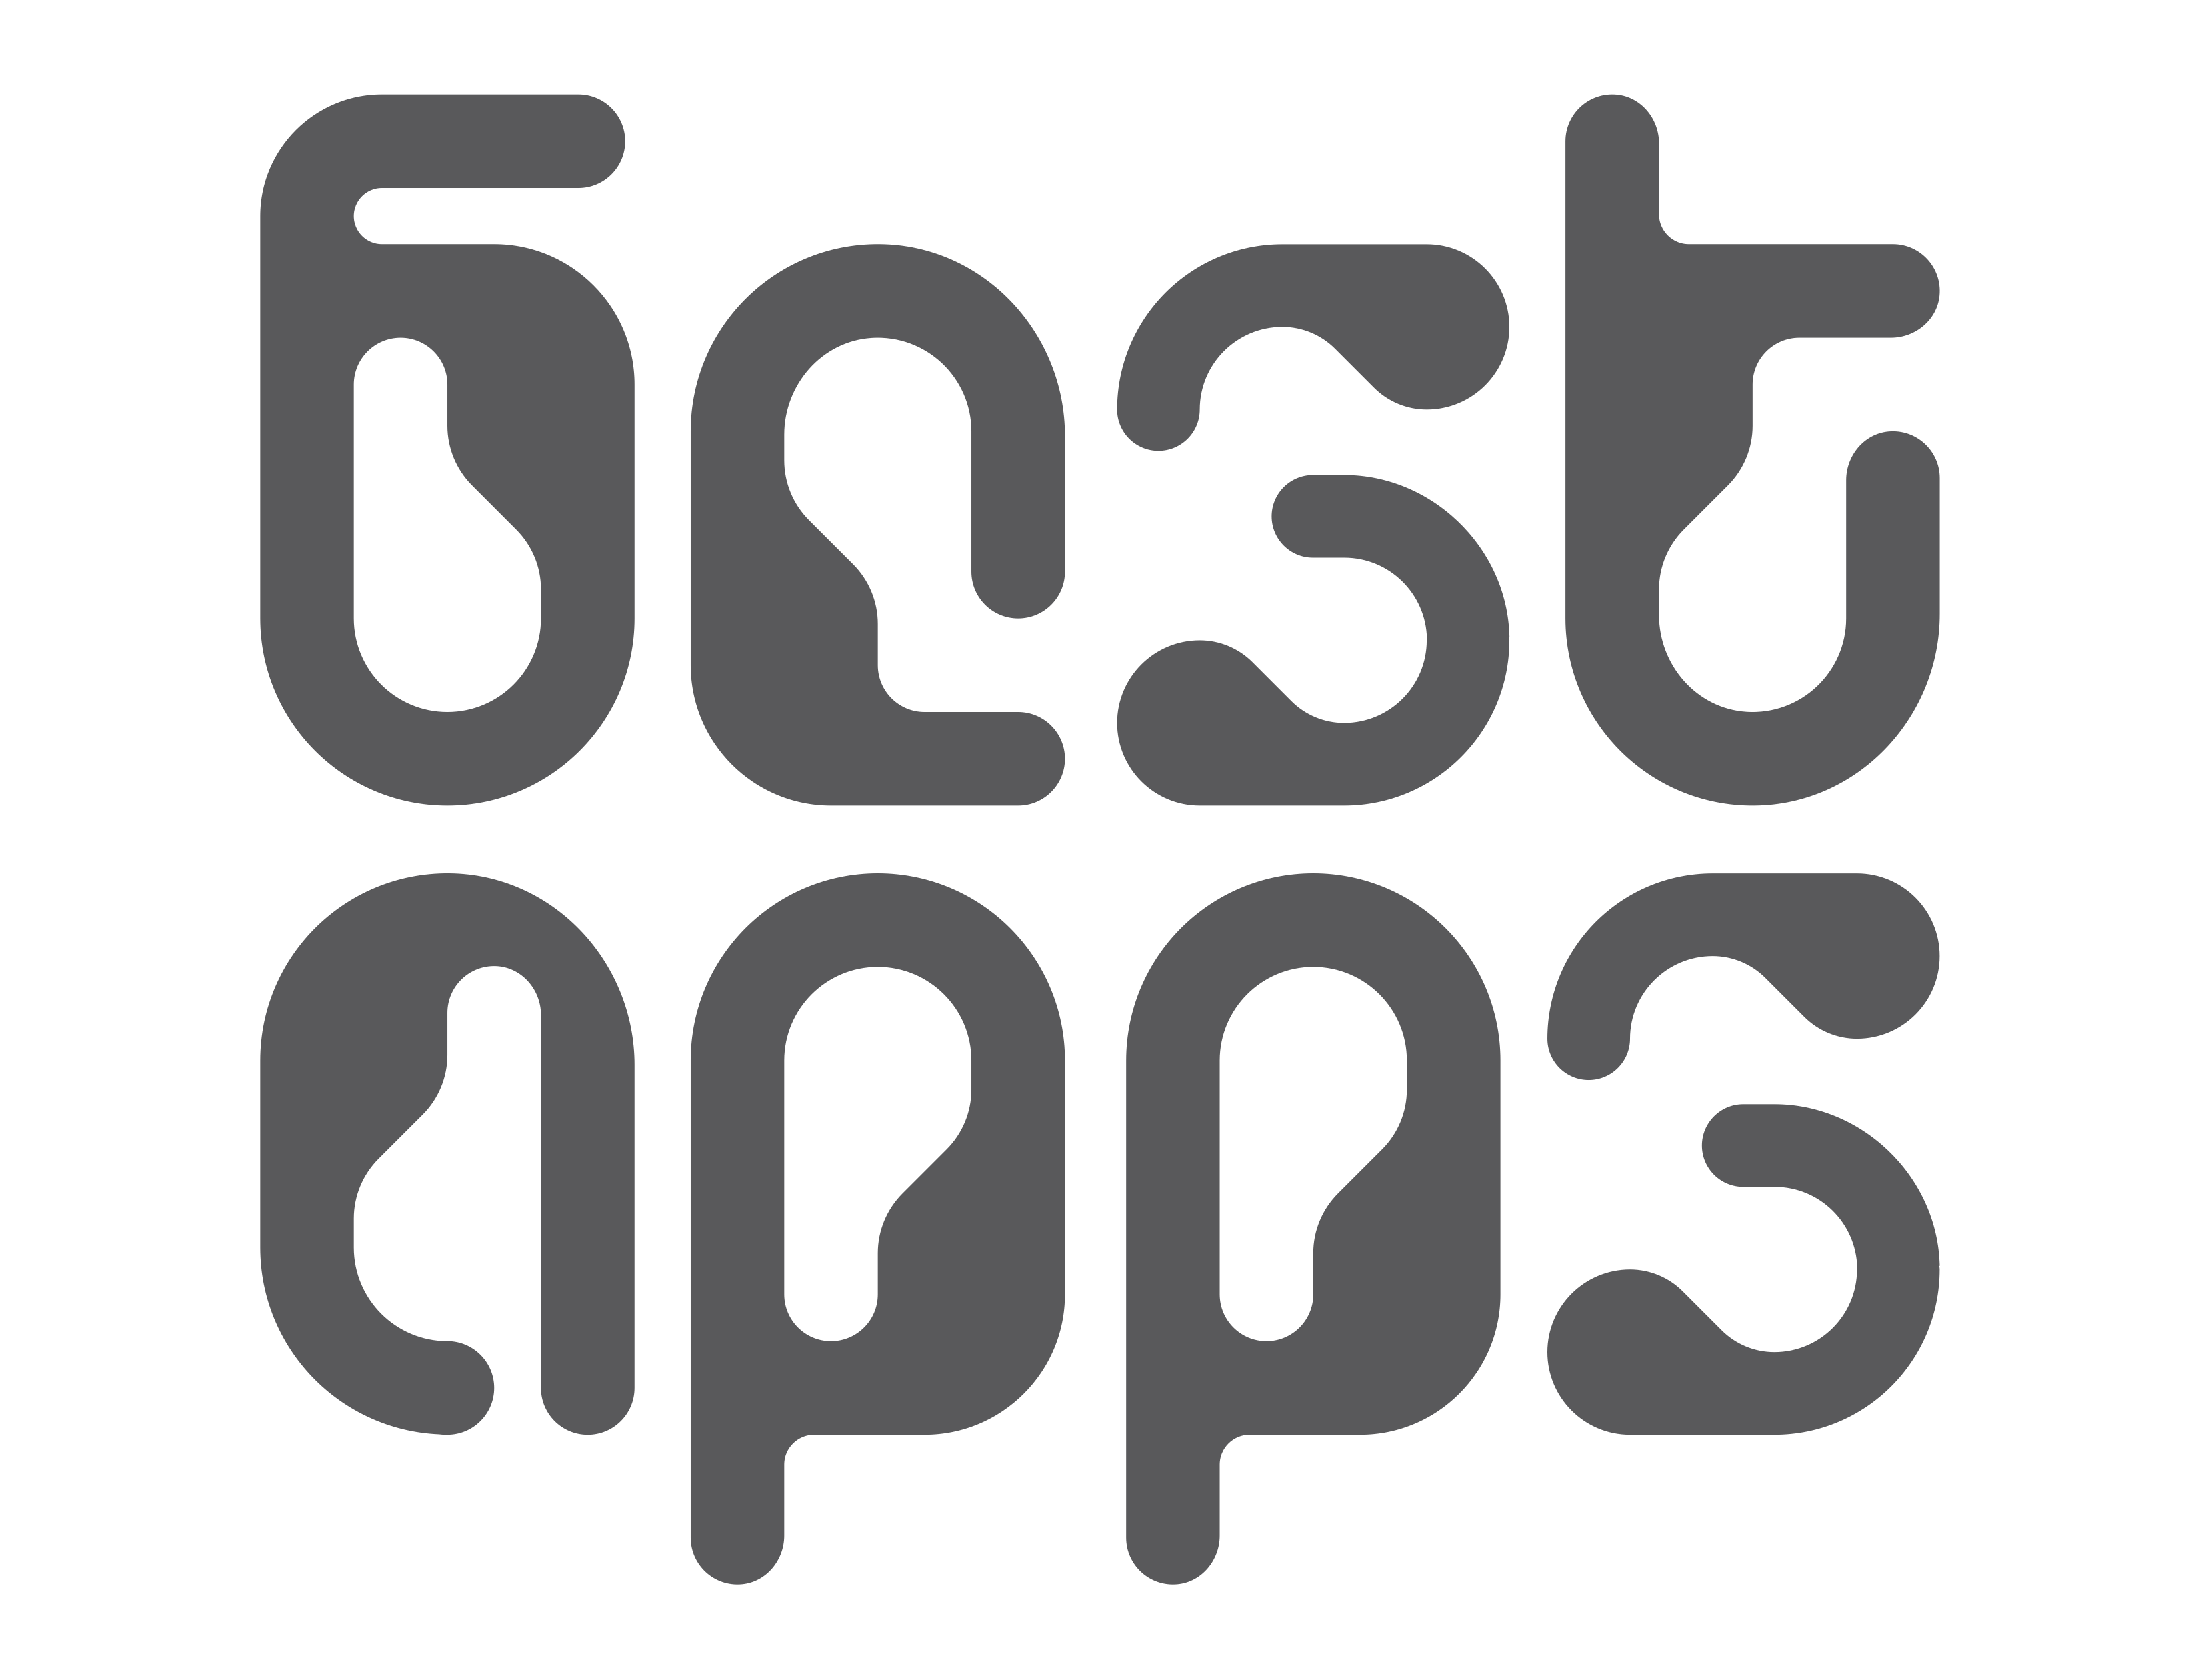 Best Apps